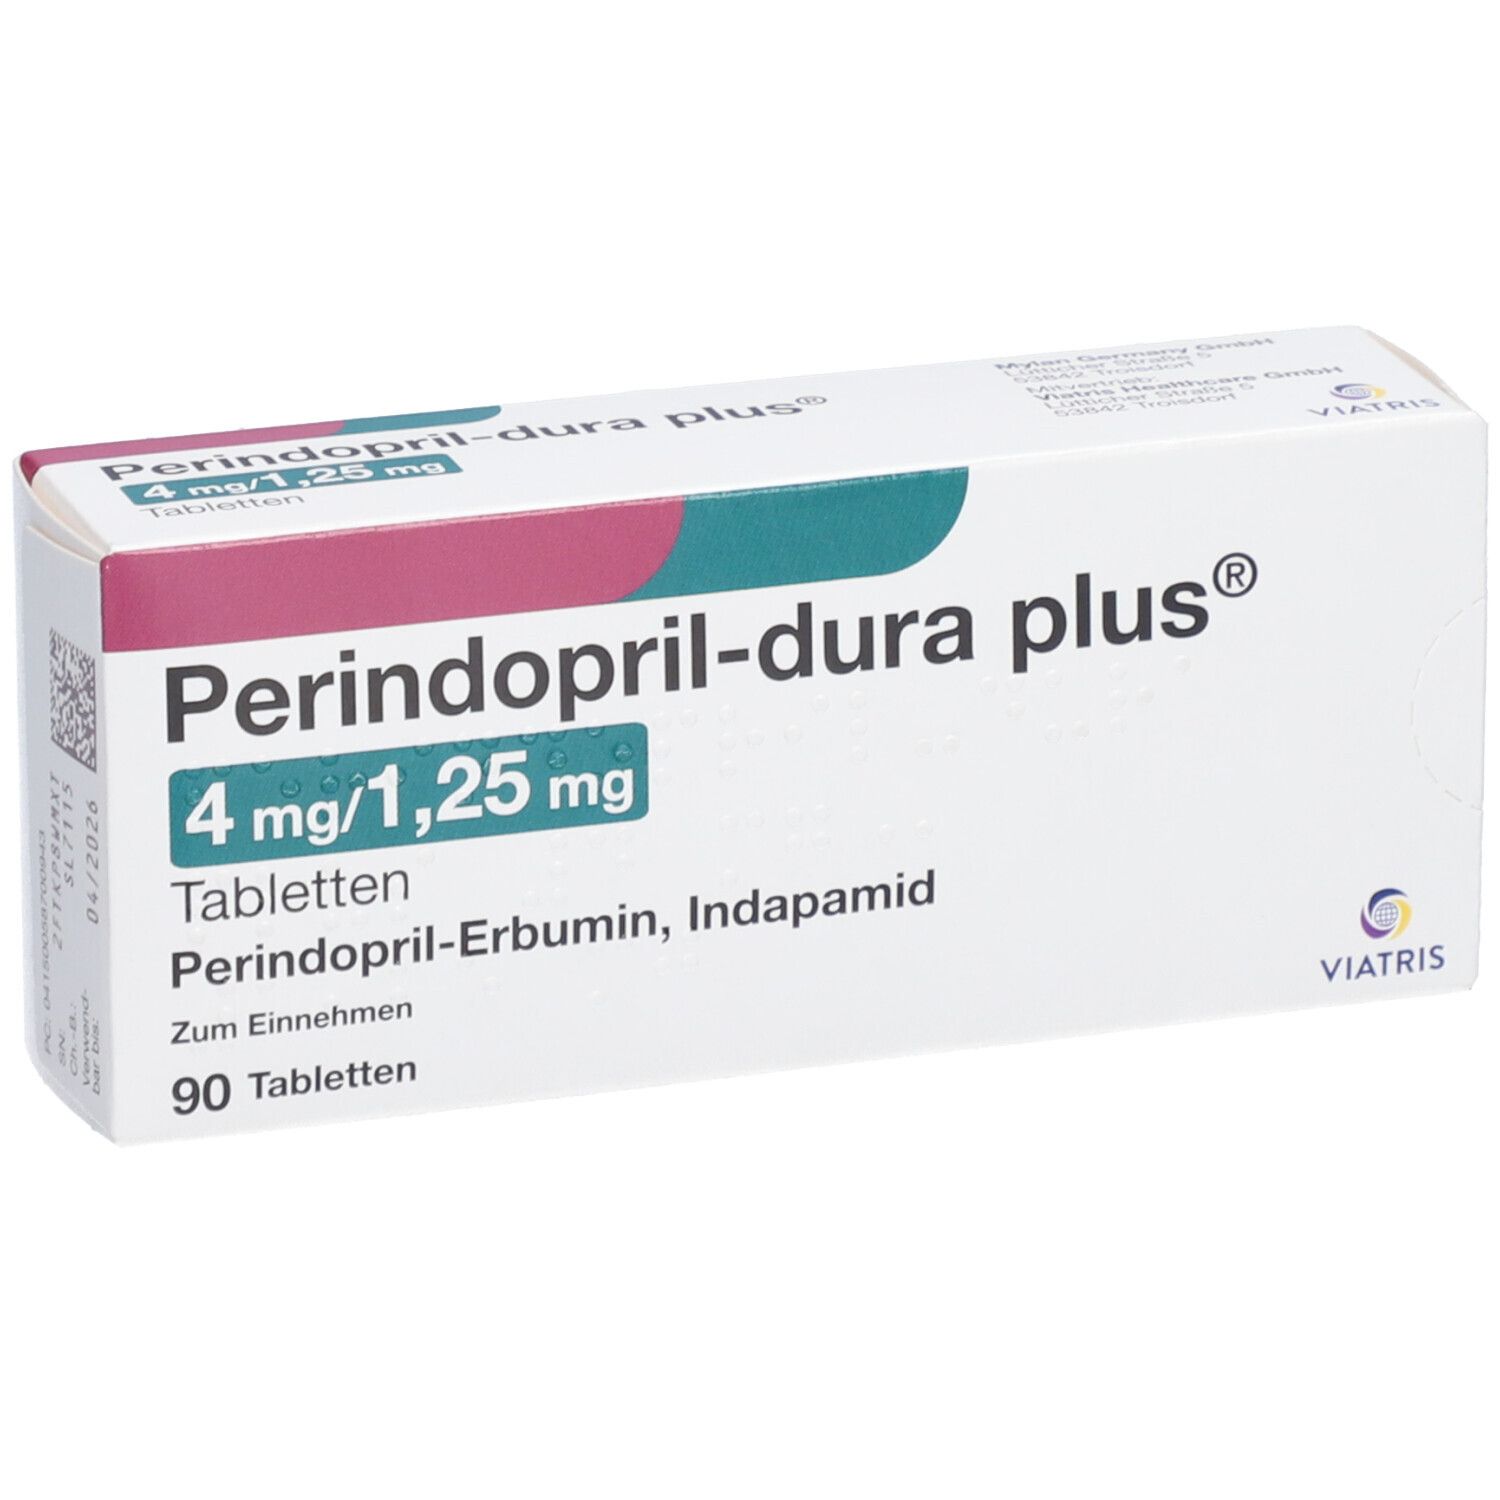 Perindopril-dura plus® 4 mg/1,25 mg